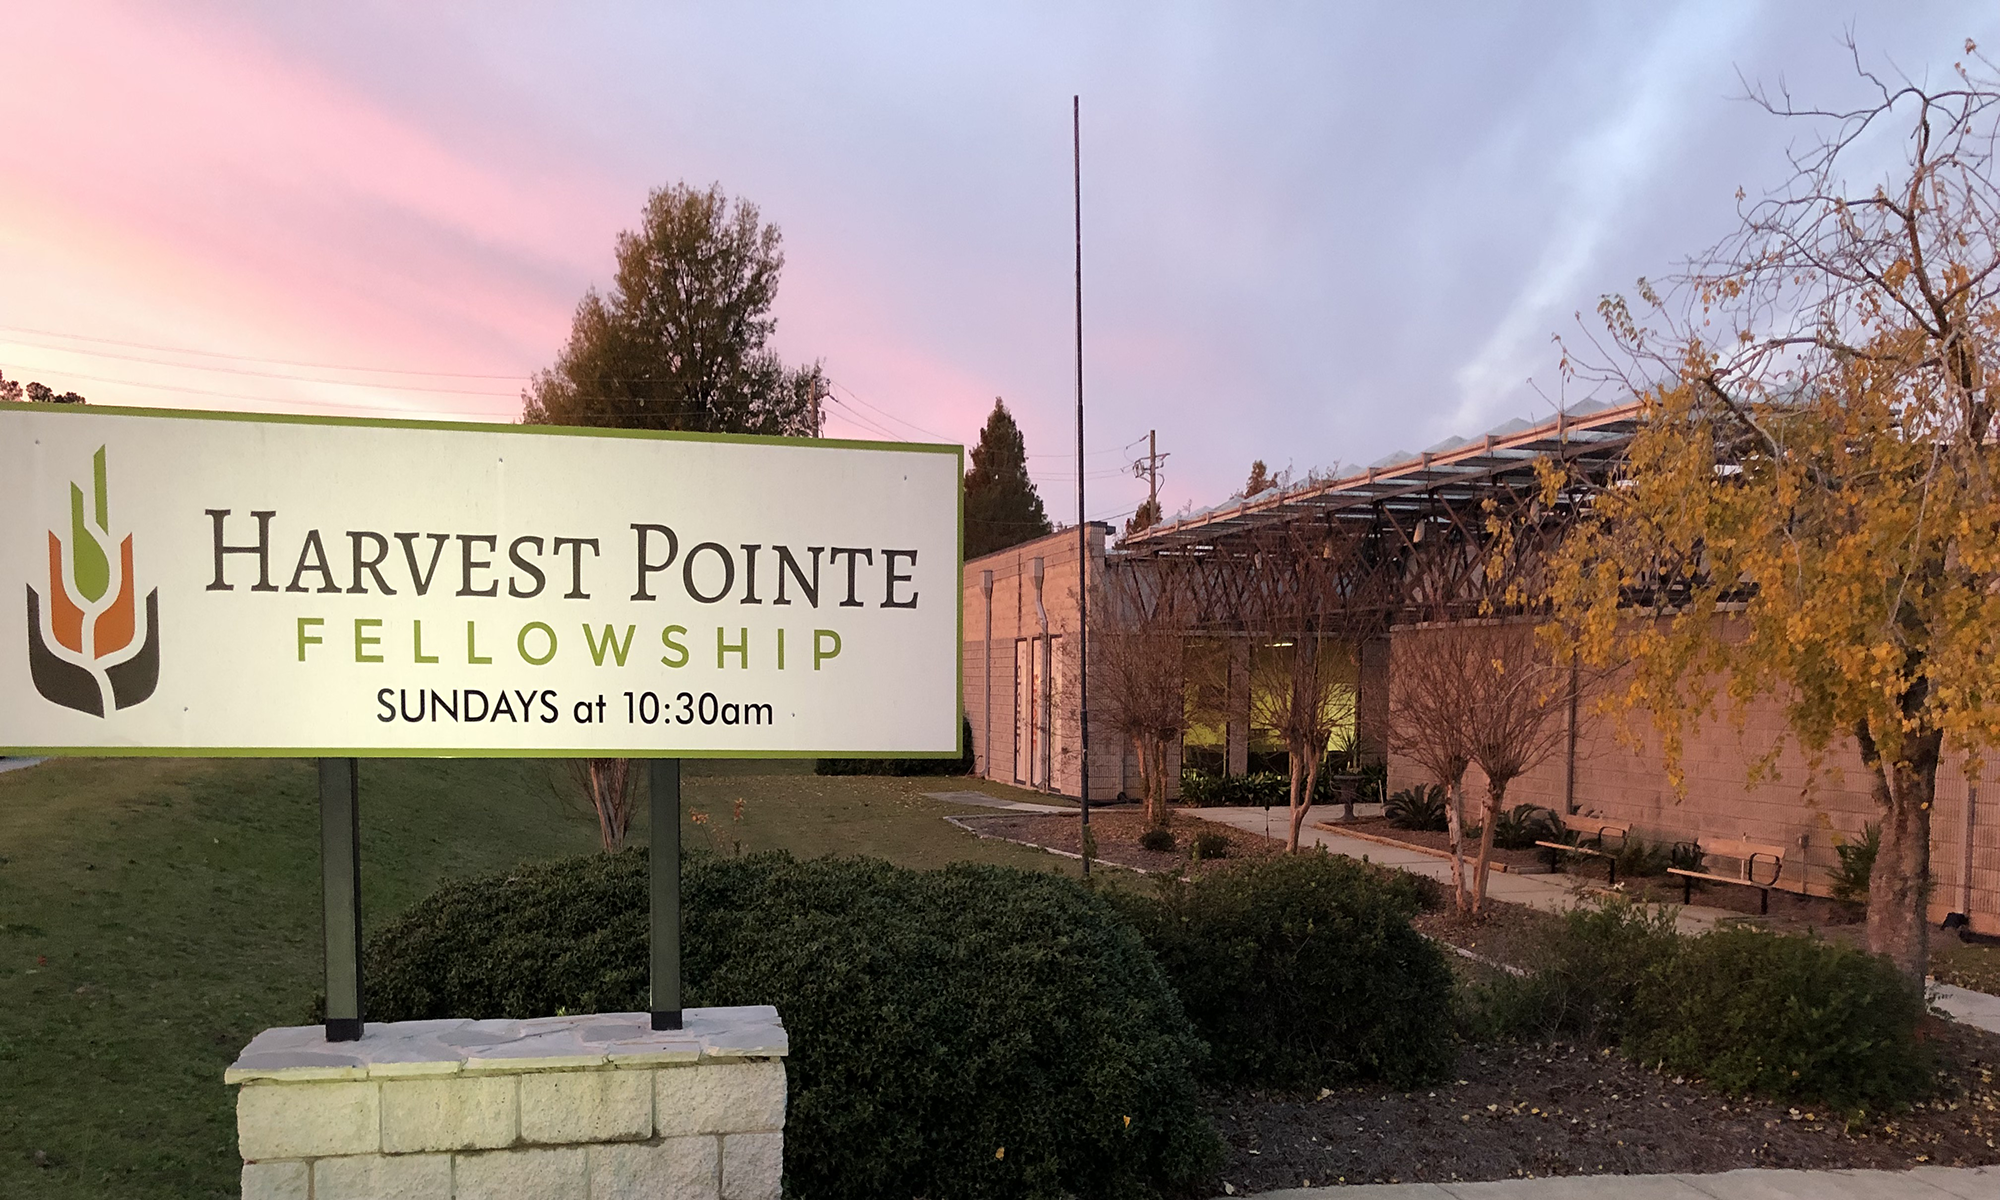 Harvest Pointe Fellowship